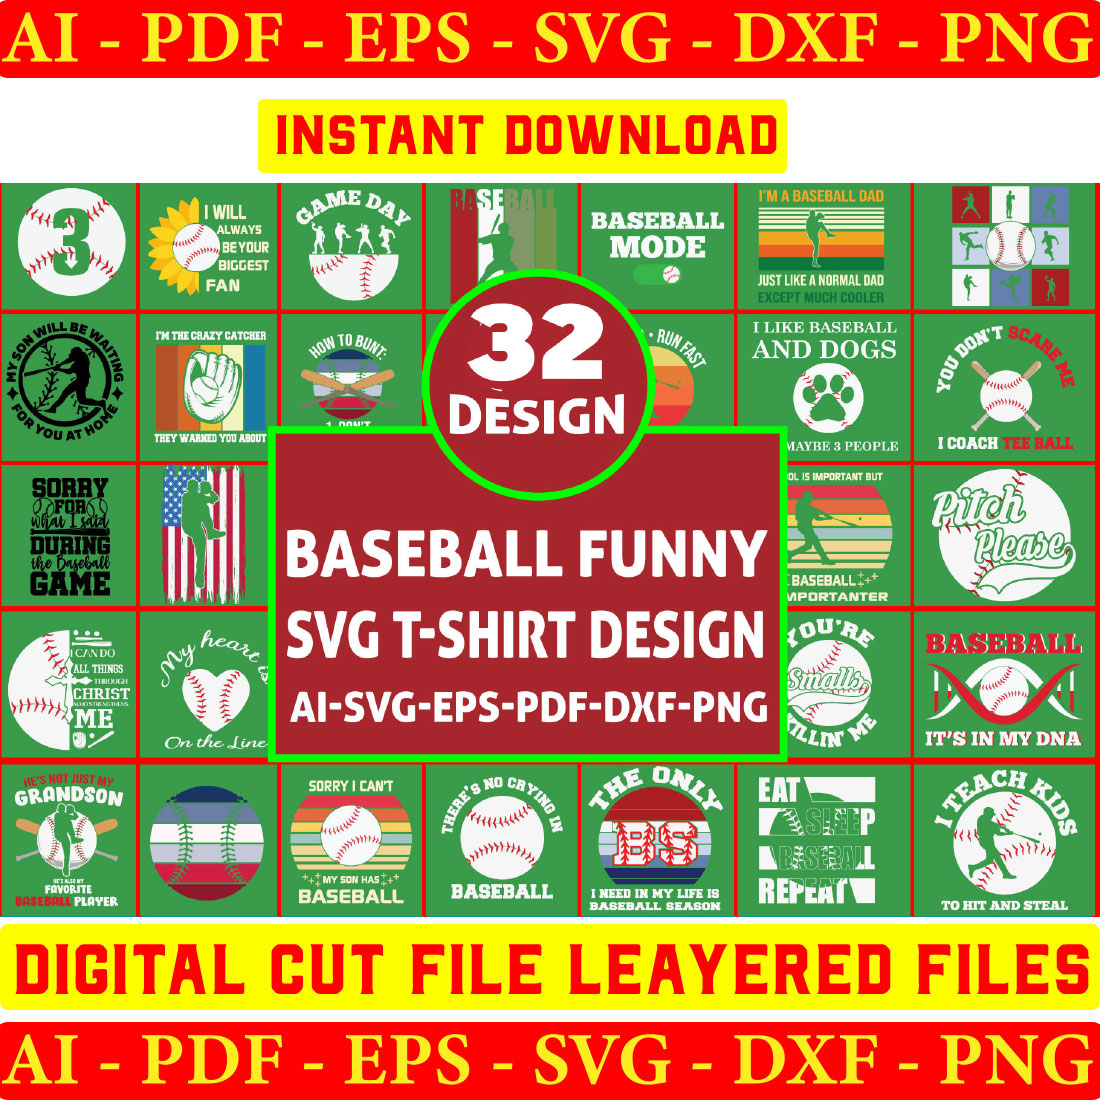 Baseball Funny SVG T-shirt Design Vol-01 cover image.